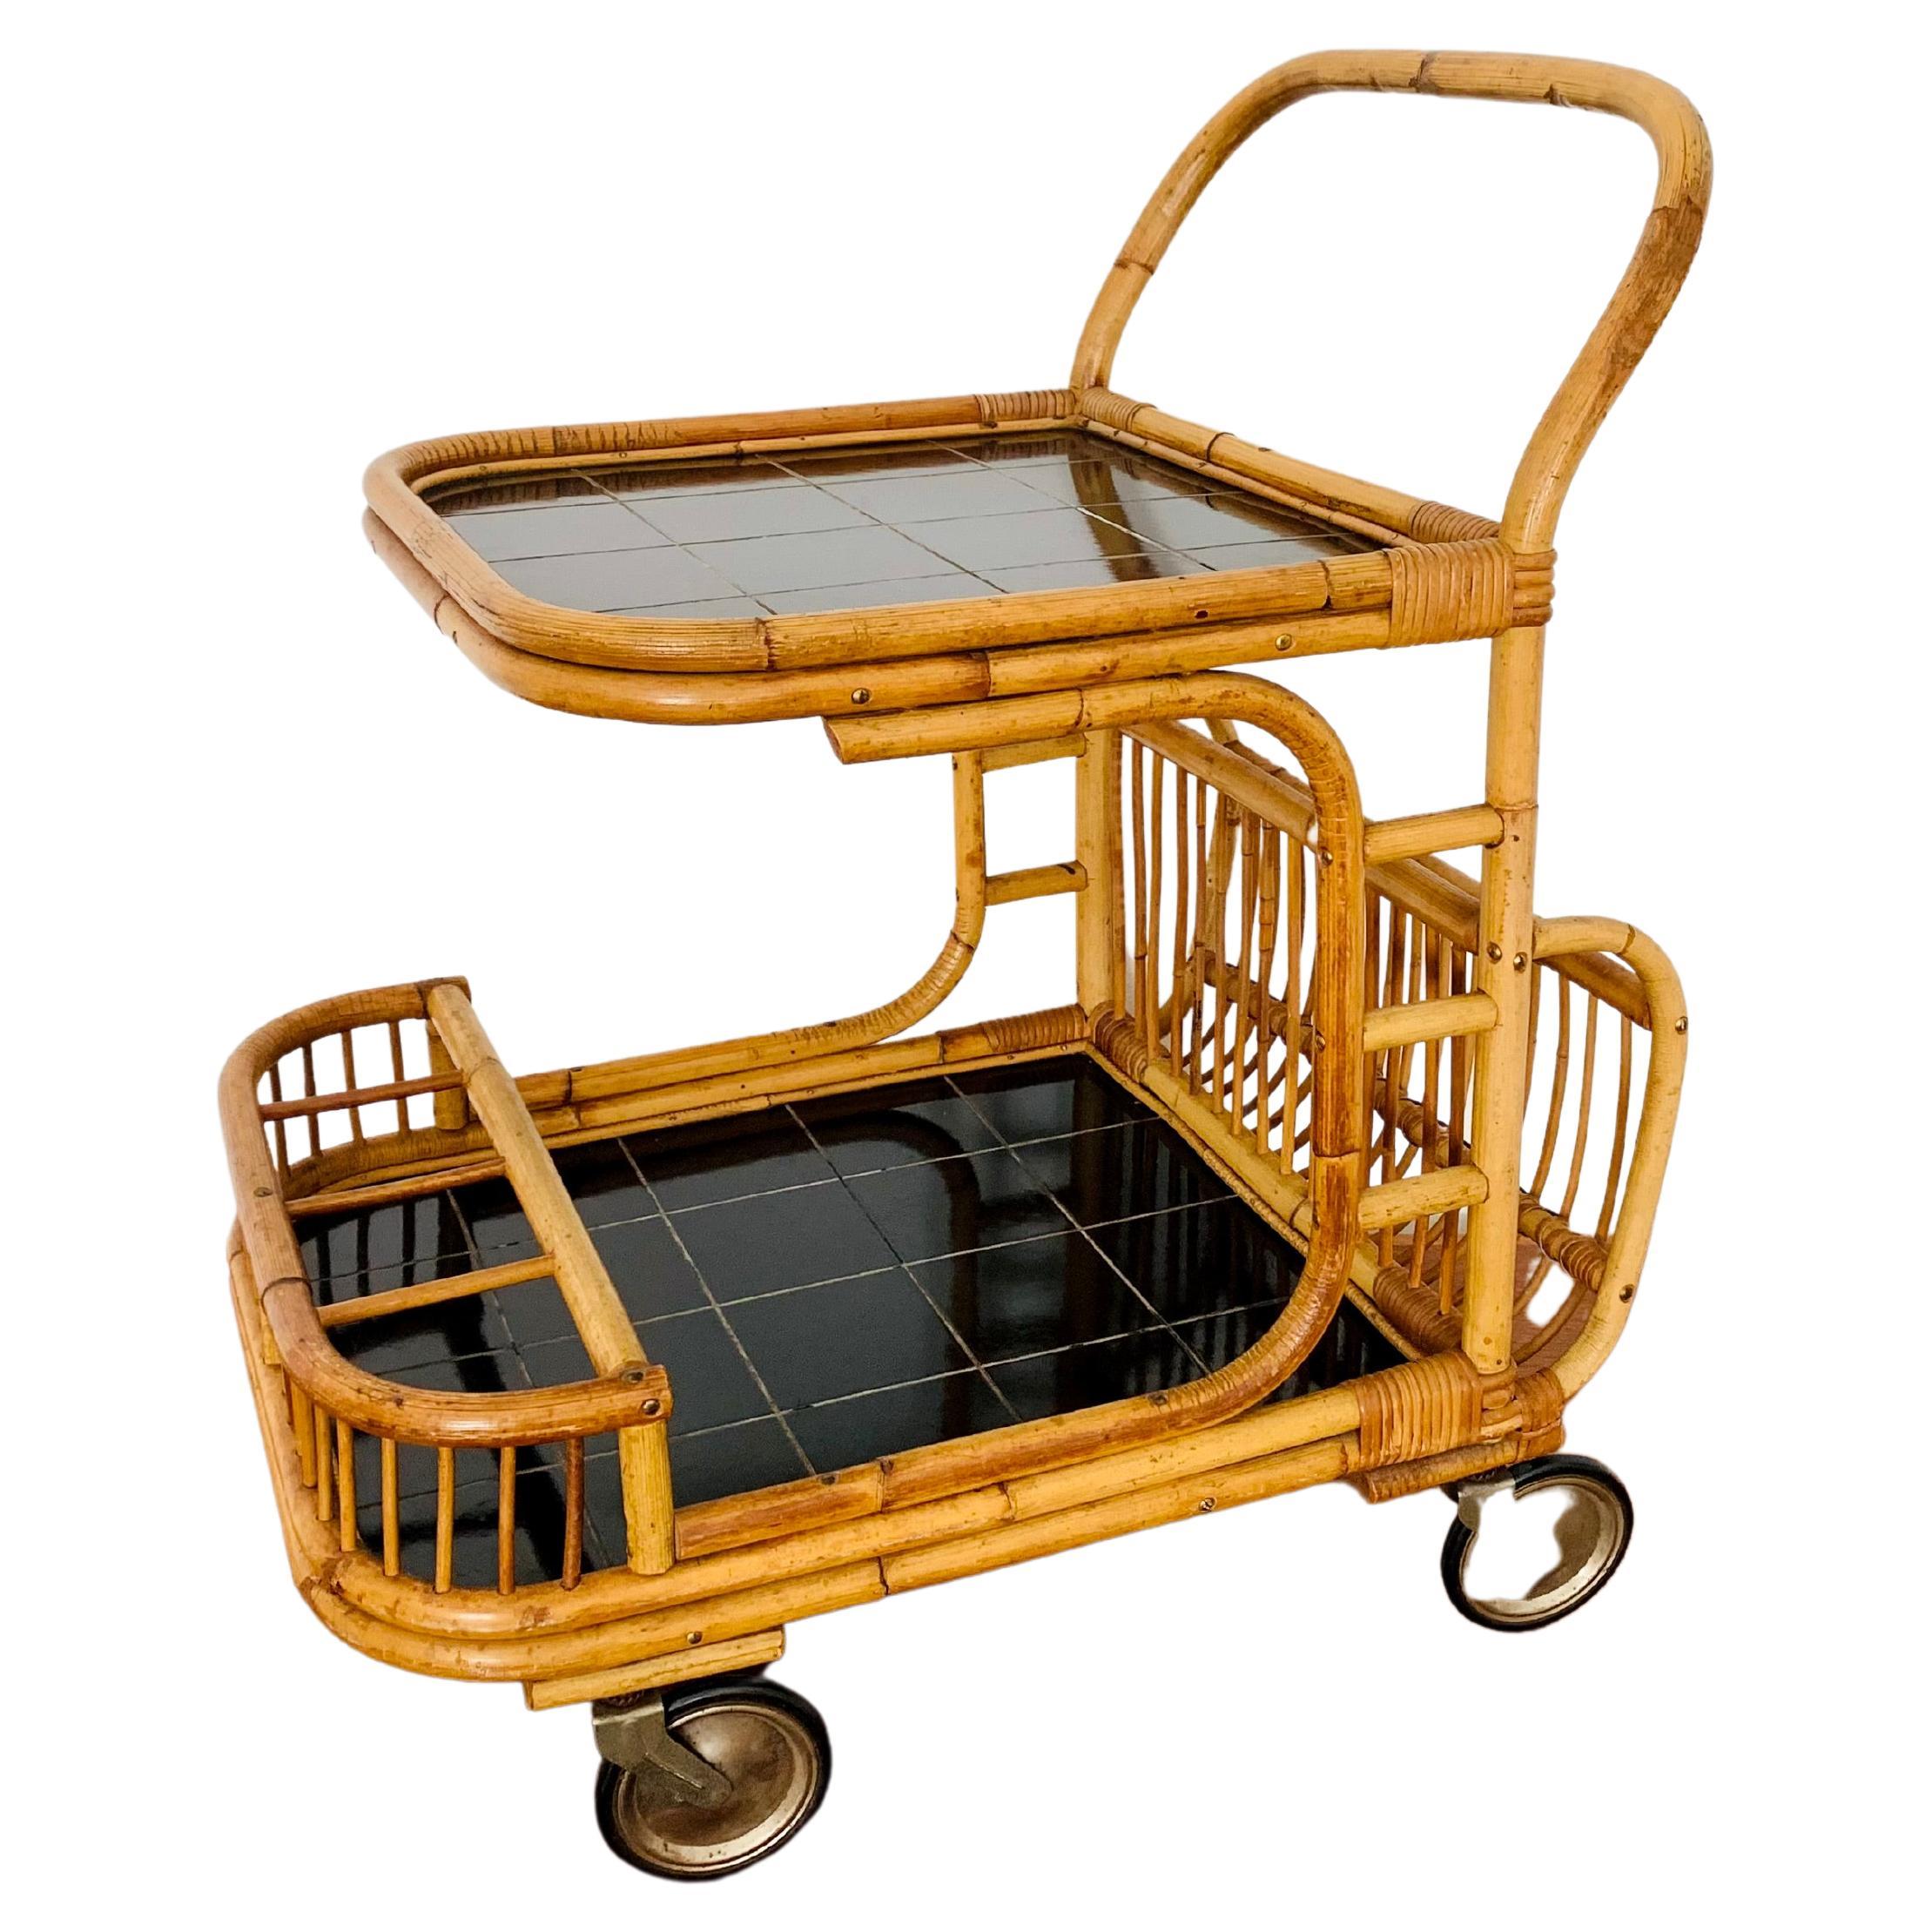 Bamboo Tea Trolley or Bar Cart